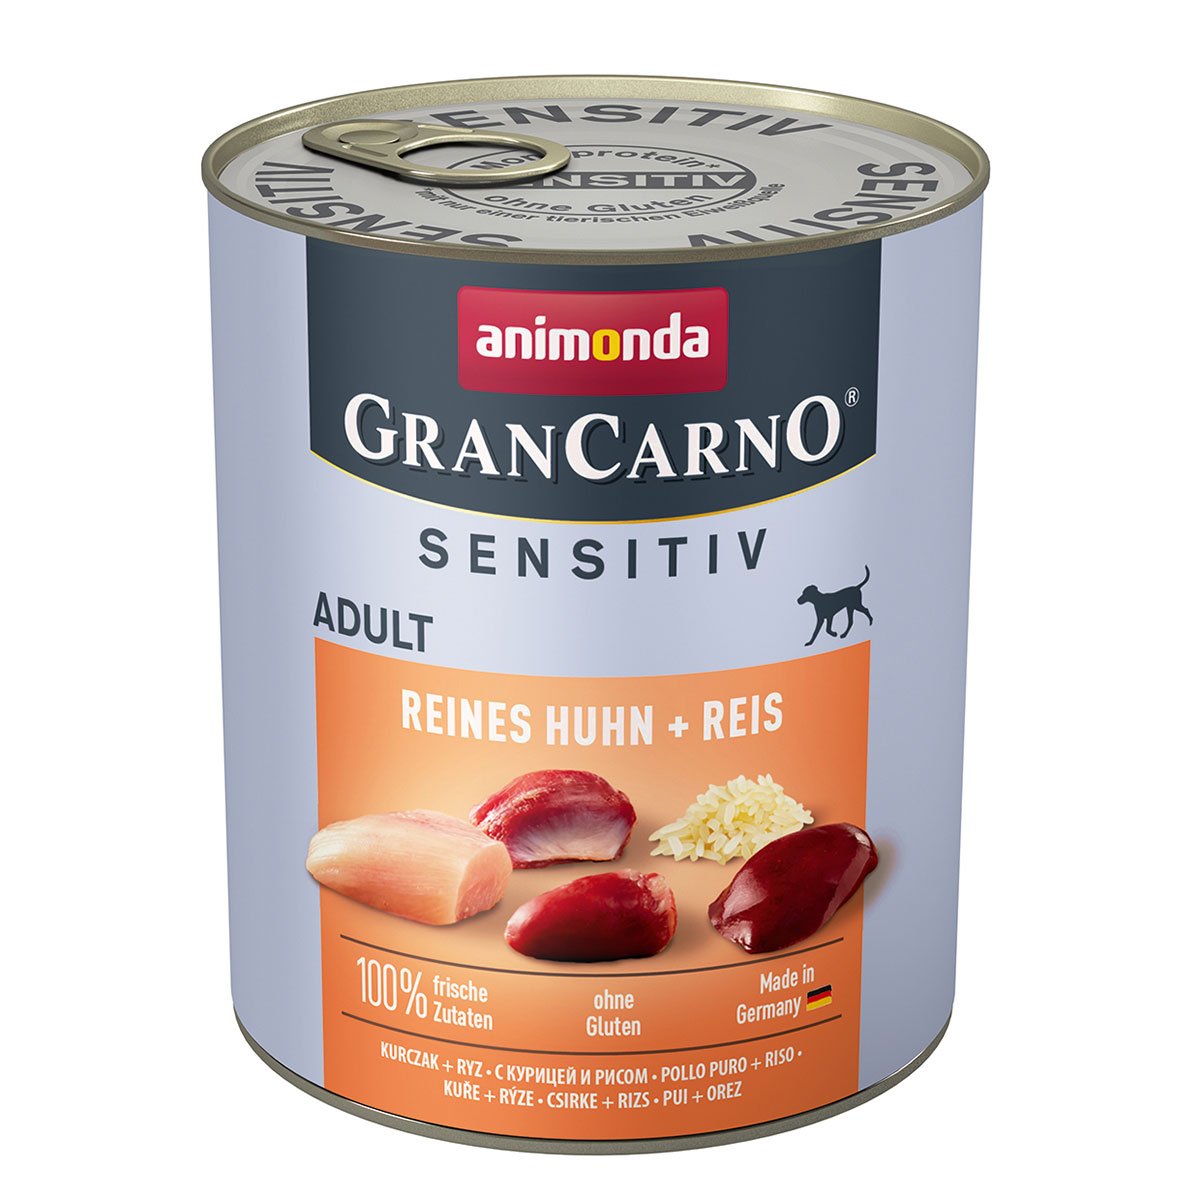 animonda GranCarno Adult Sensitiv Reines Huhn + Reis 6x800g von animonda GranCarno